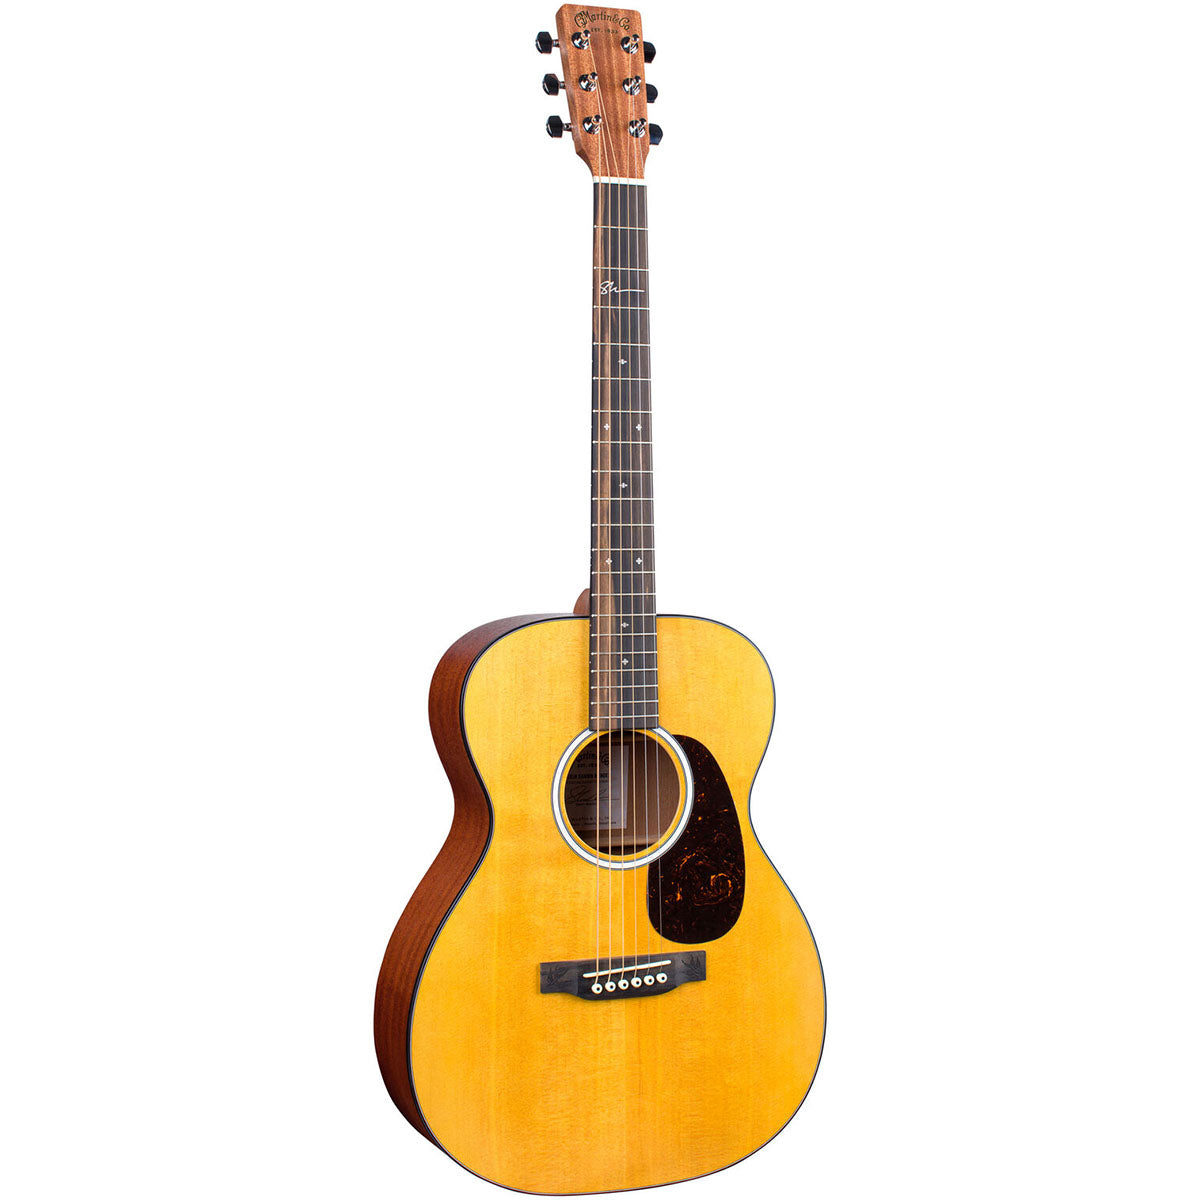 Martin 000-JR10E Shawn Mendes Signature Acoustic Guitar w/ Gig Bag